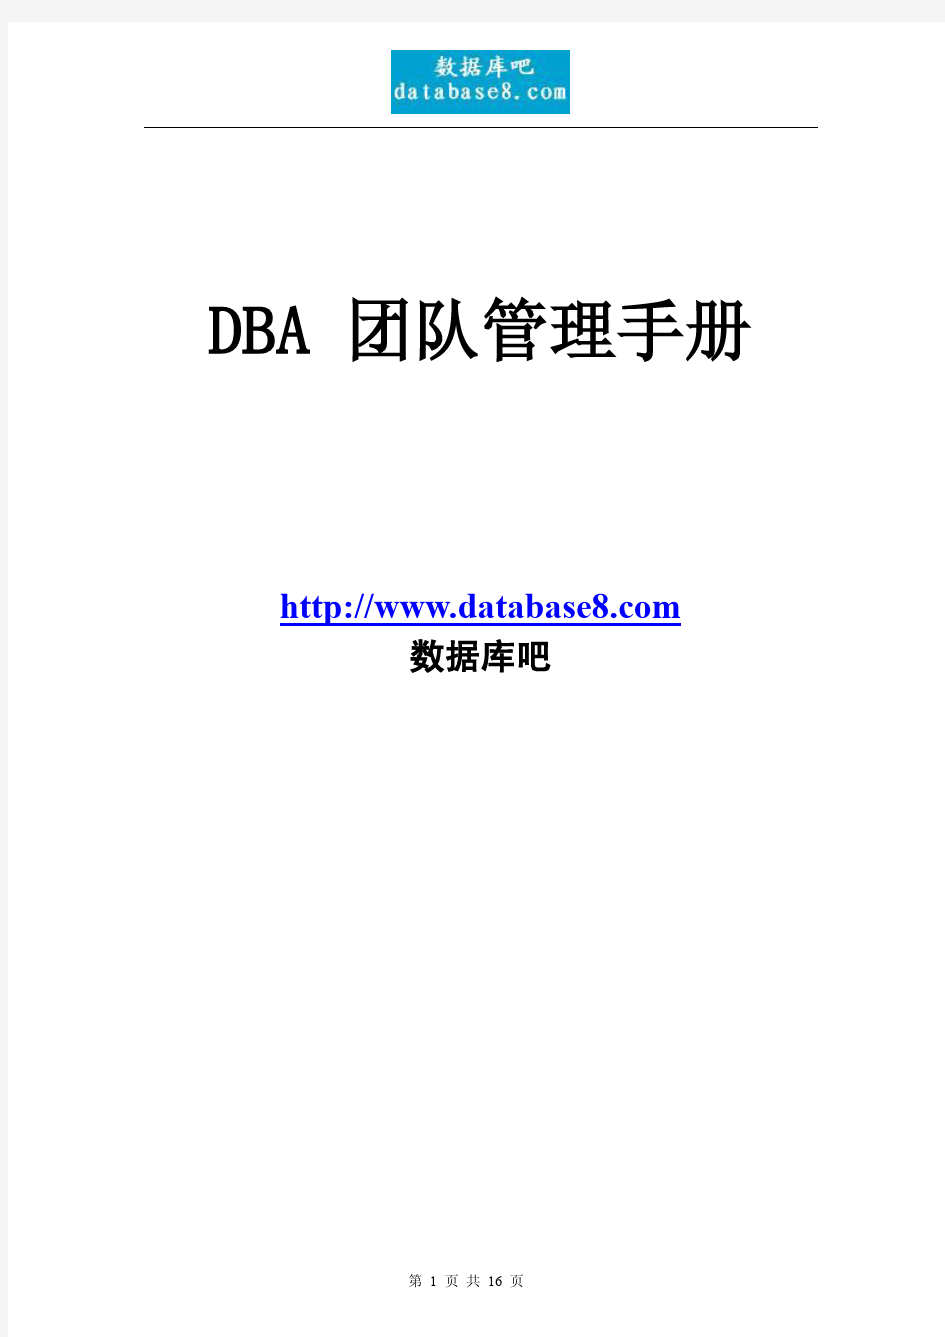 《DBA团队管理手册》